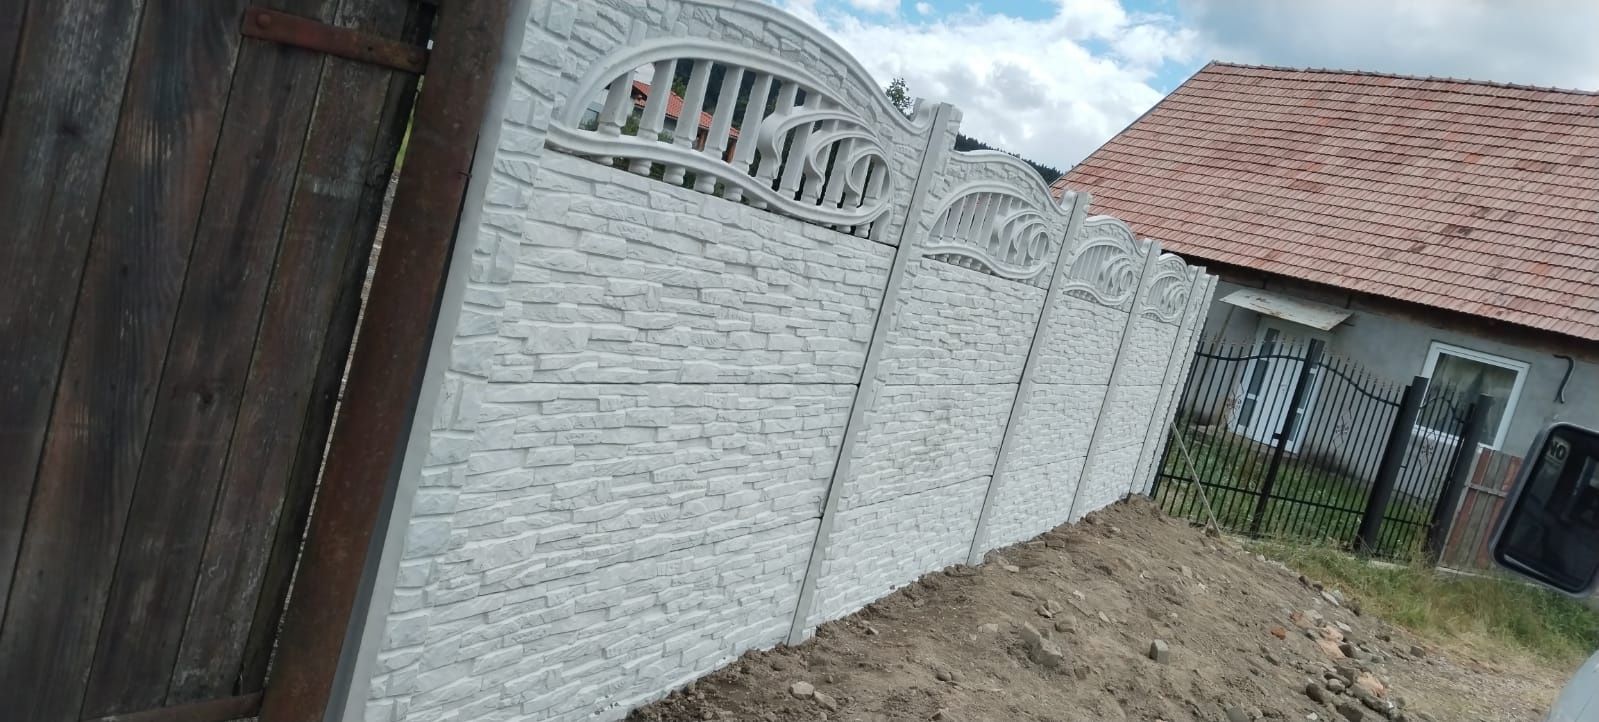 Gard beton cu sau fara montaj